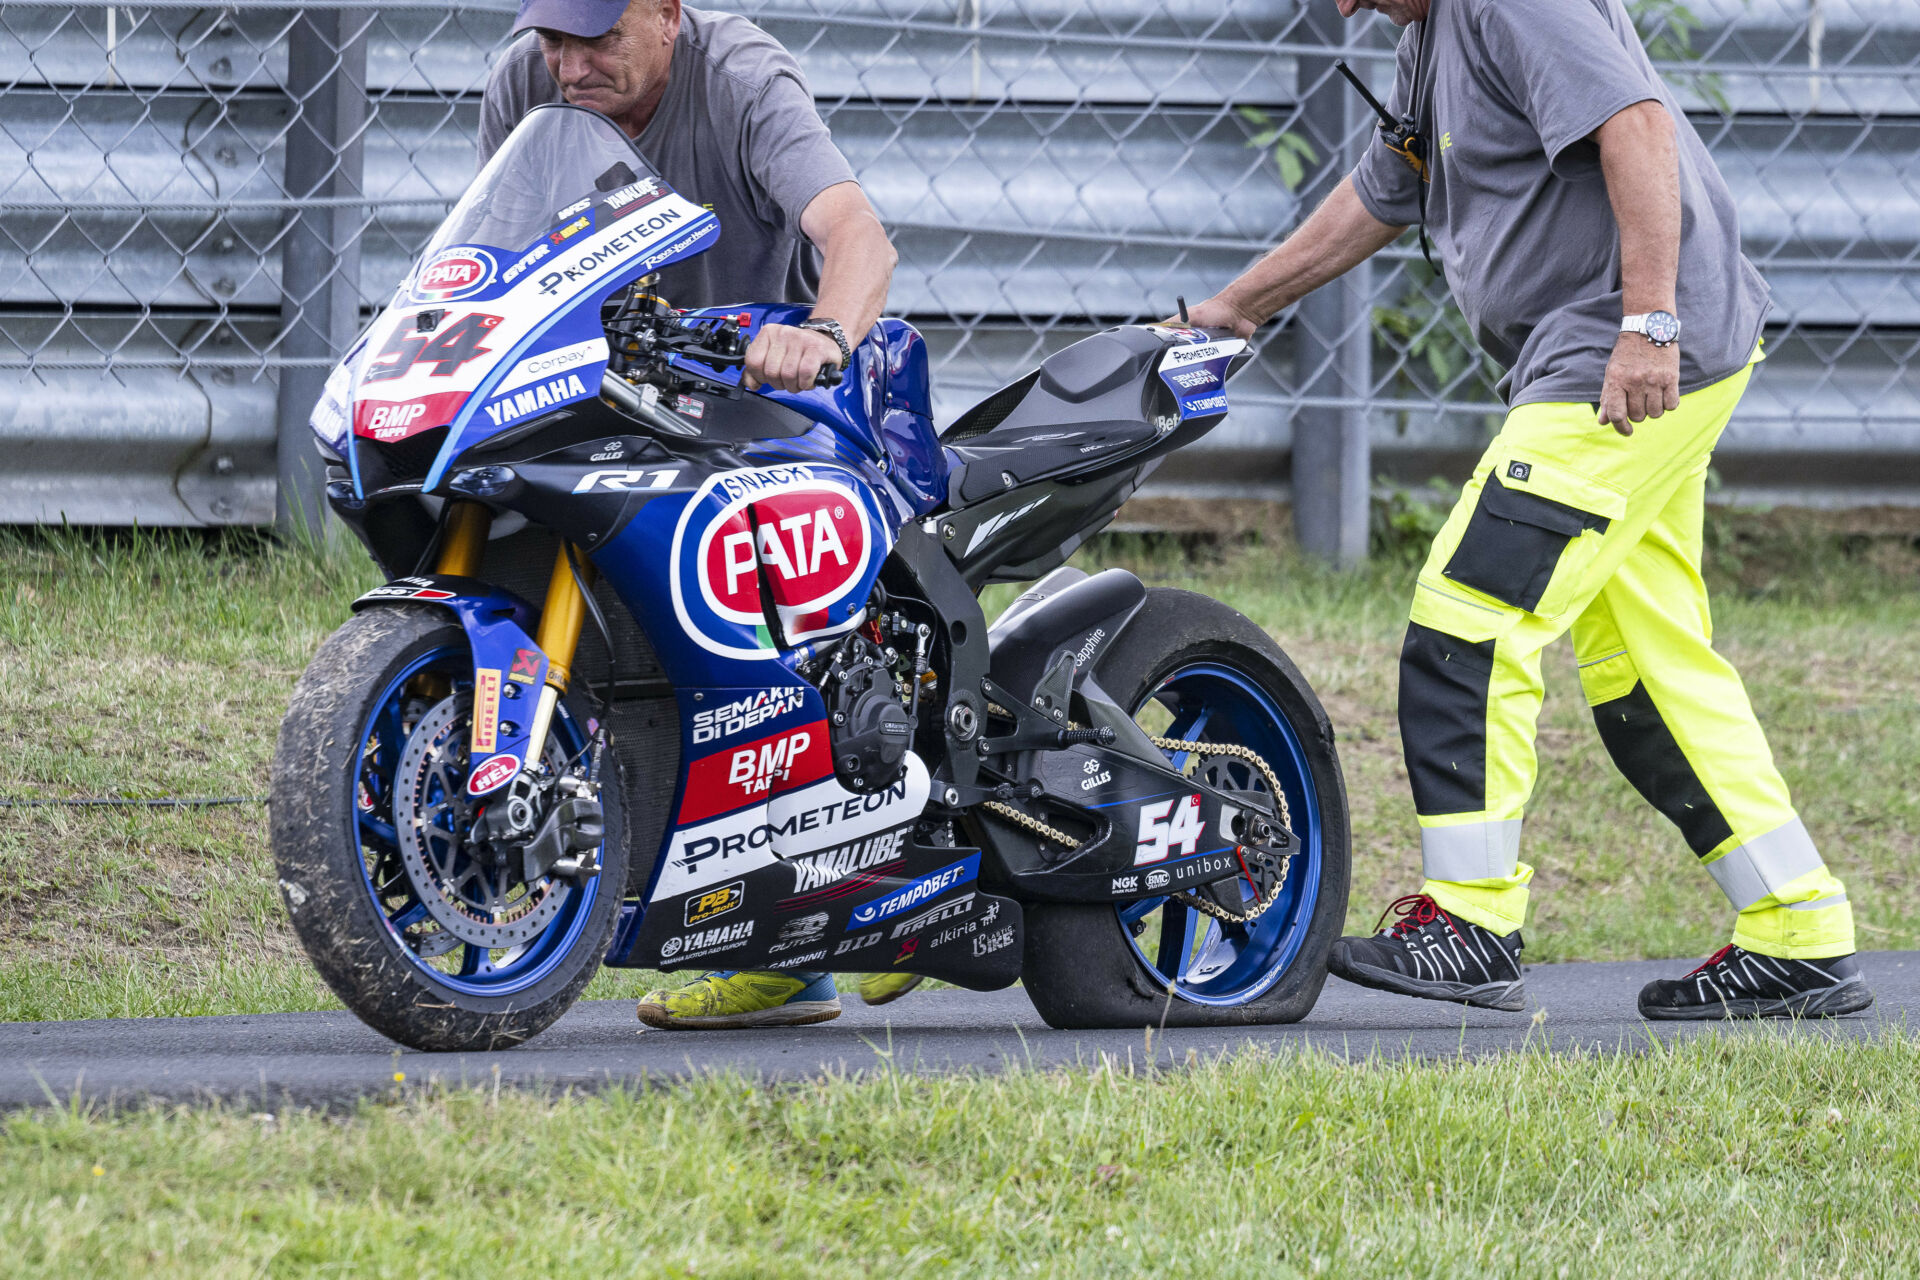 Toprak Razgatlioglu's rear tire blistered and suffered sudden deflation prior to his crash in World Superbike Race Two at Autodrom Most. Photo courtesy Yamaha.